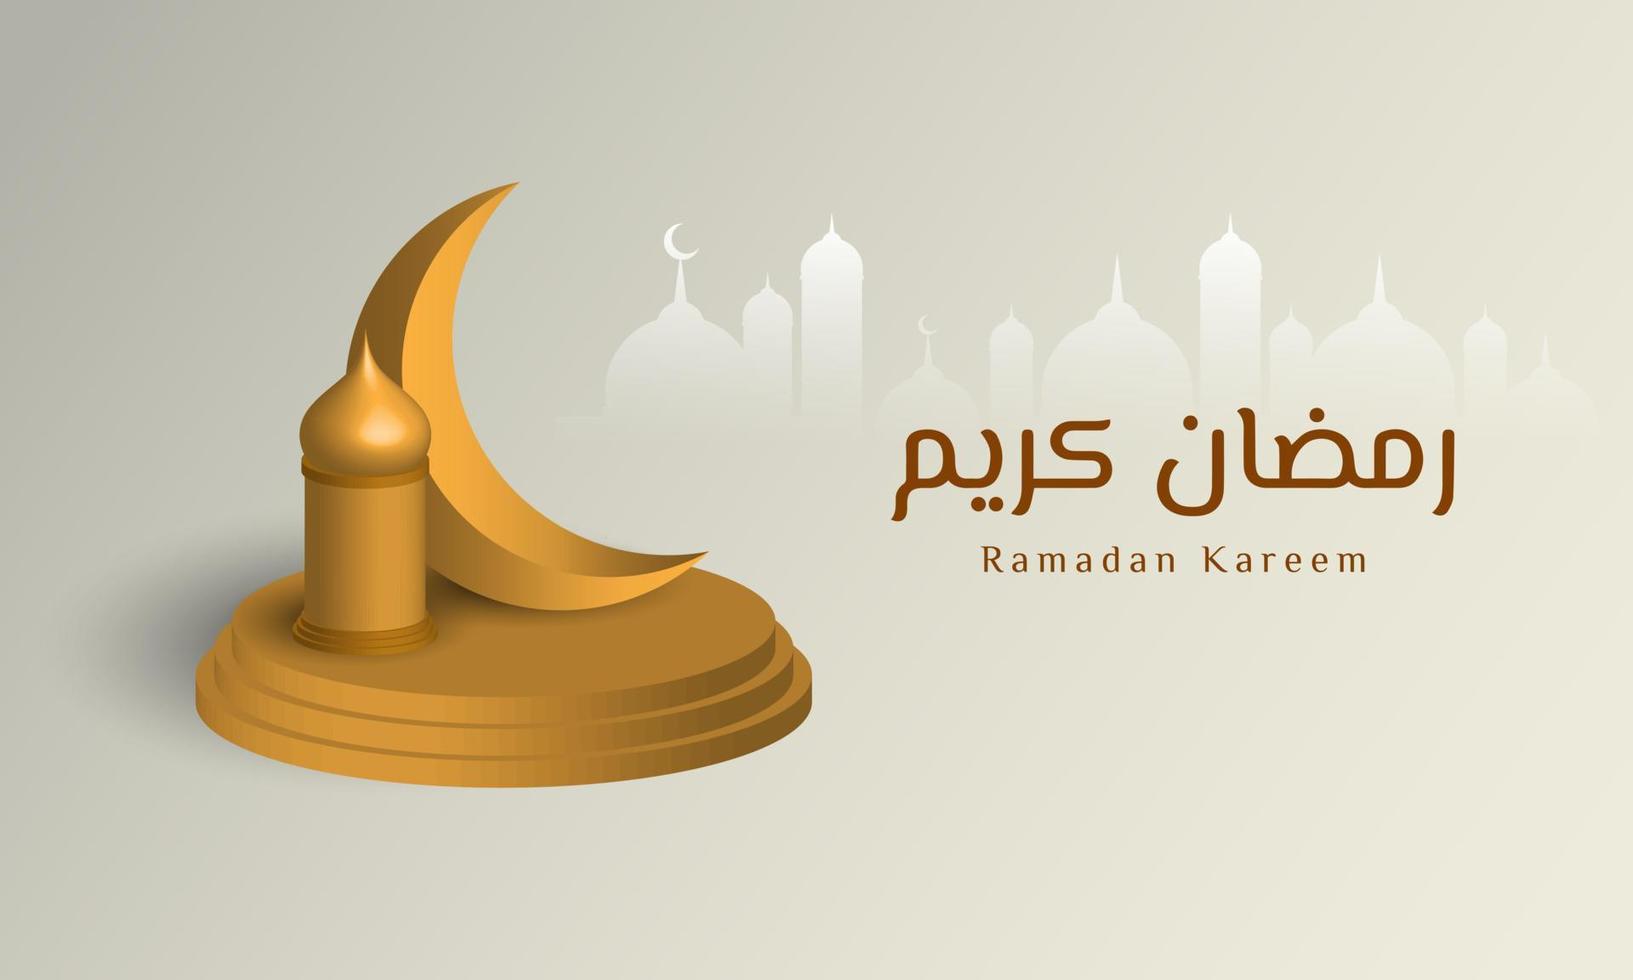 ramadan kareem achtergrondontwerp. vector